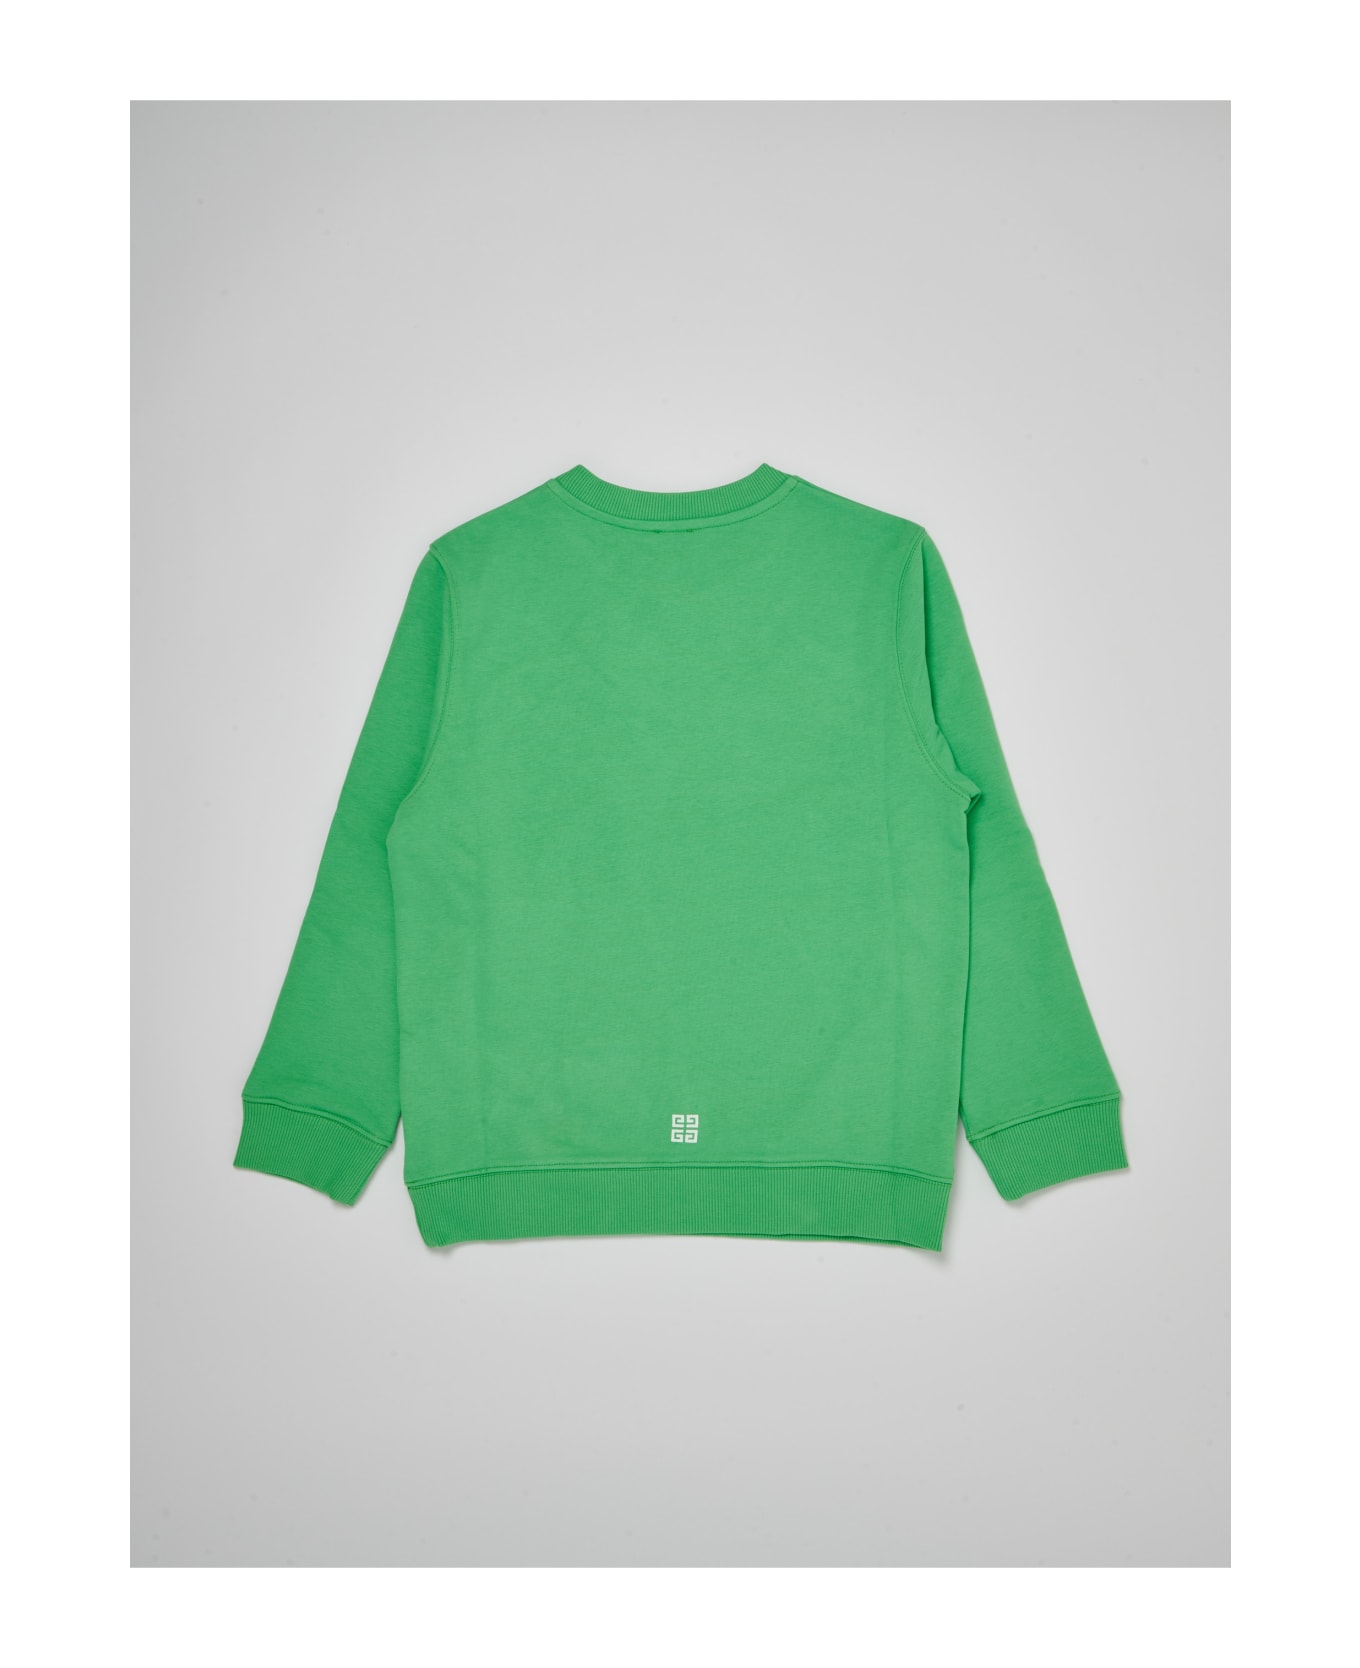 Givenchy Sweatshirt Sweatshirt - VERDE FLUO